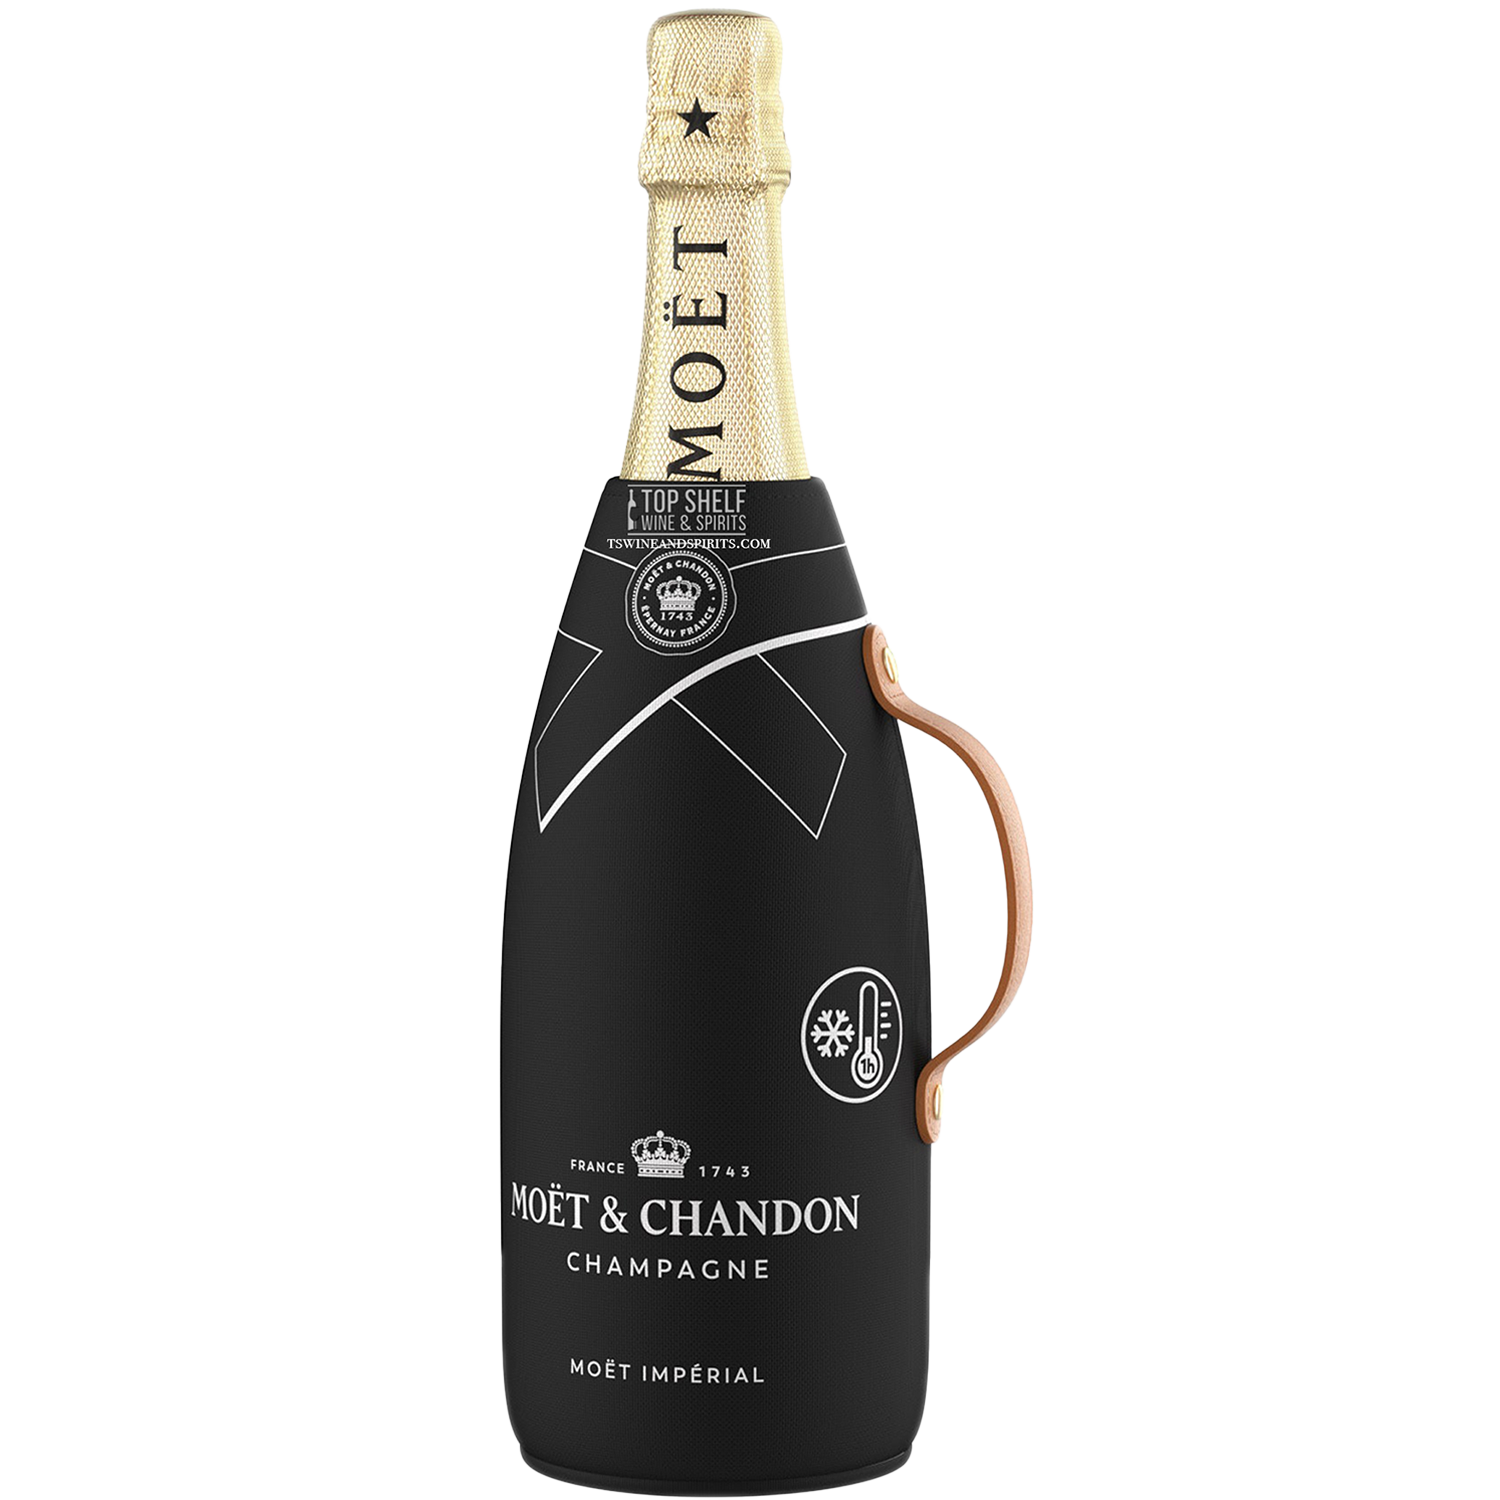 Moet & Chandon Champagne Brut Imperial Rosé (750ml bottle)